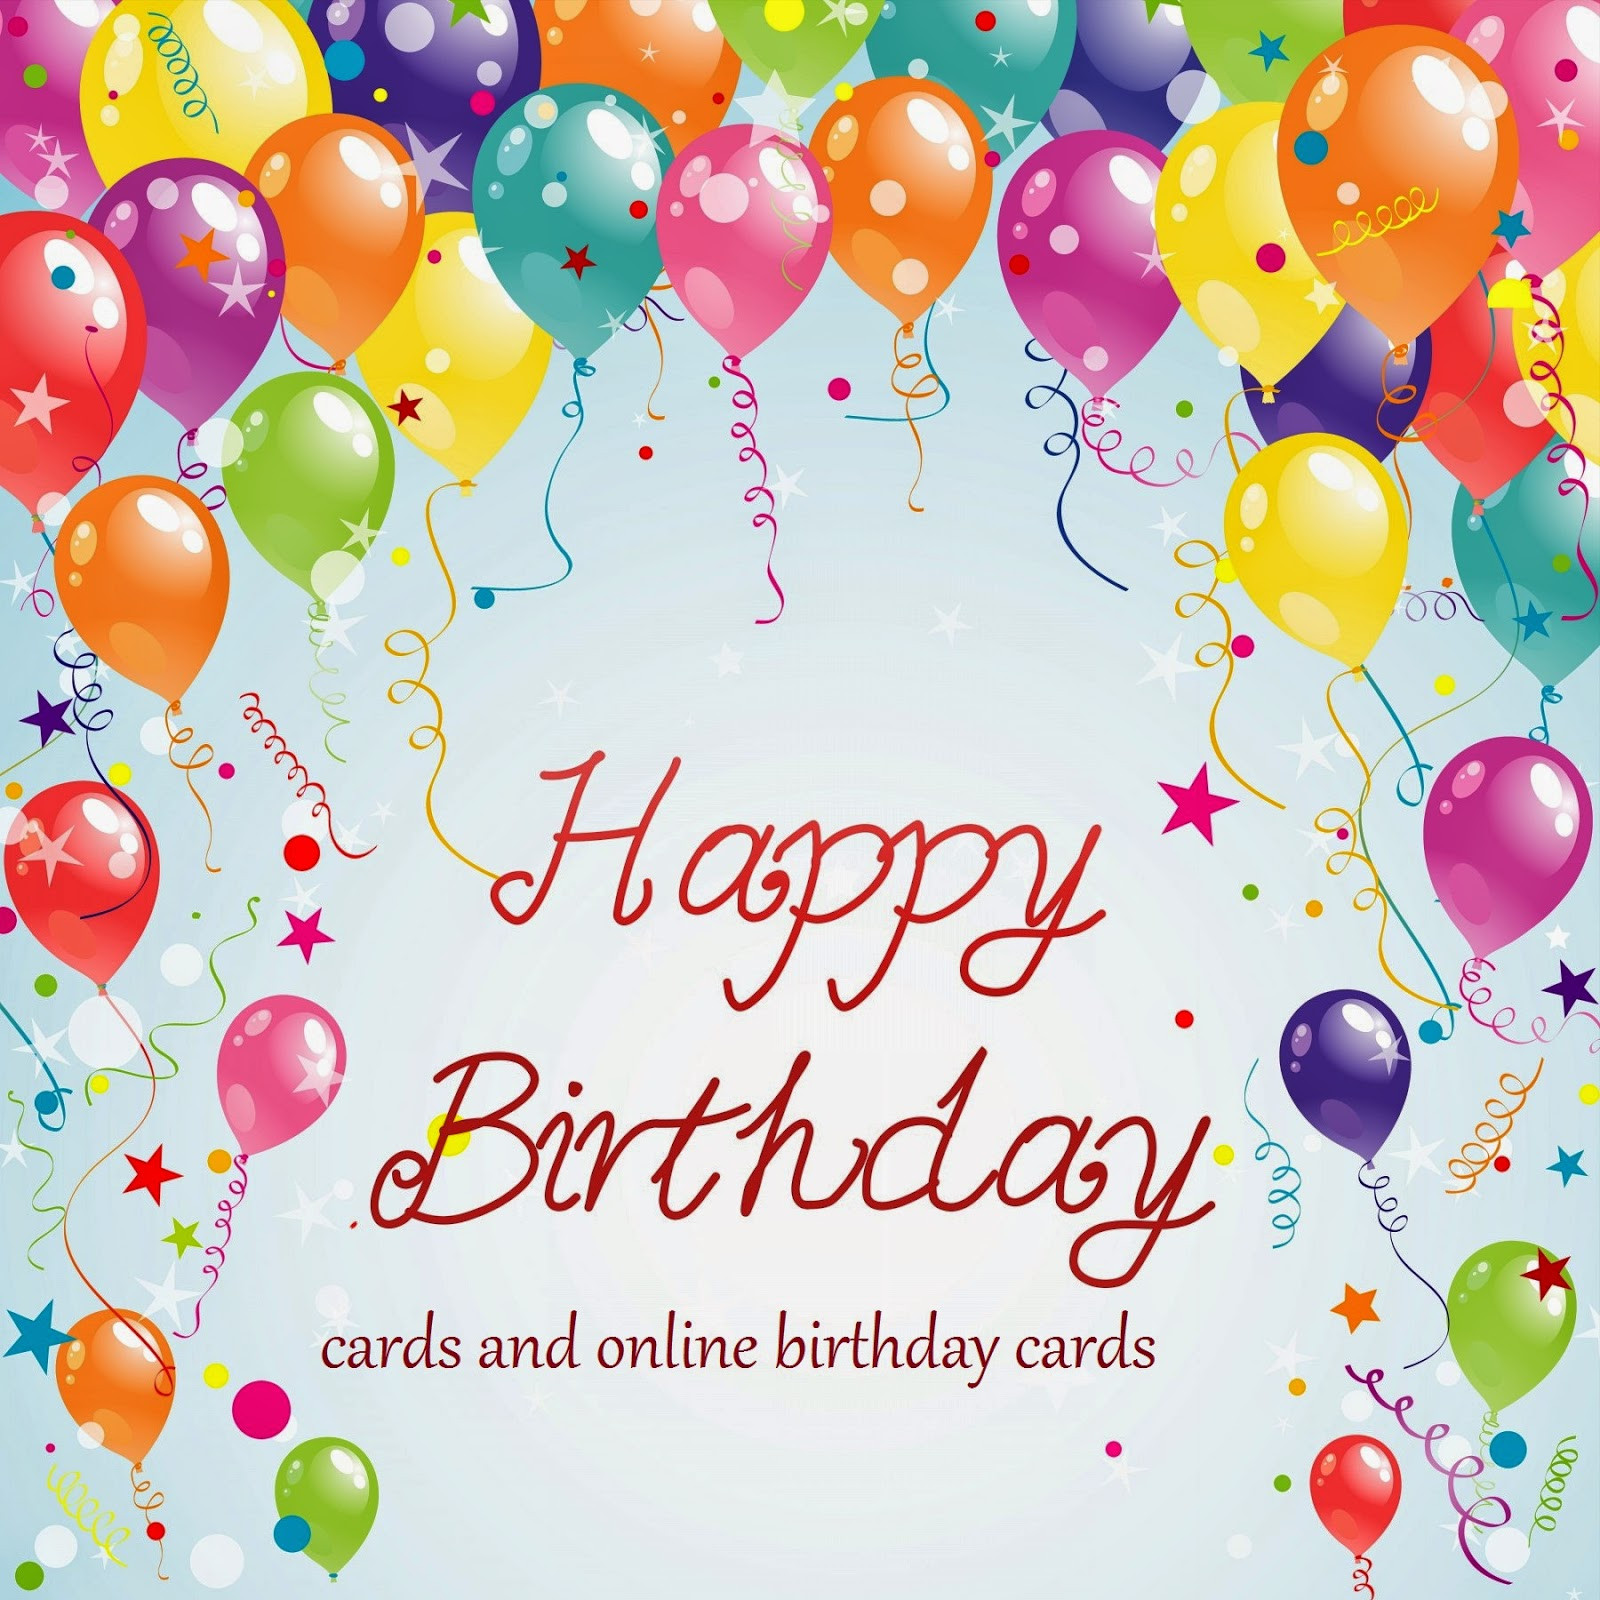 Happy Birthday Cards To Print
 Happy birthday cards free [birthday cards] and e